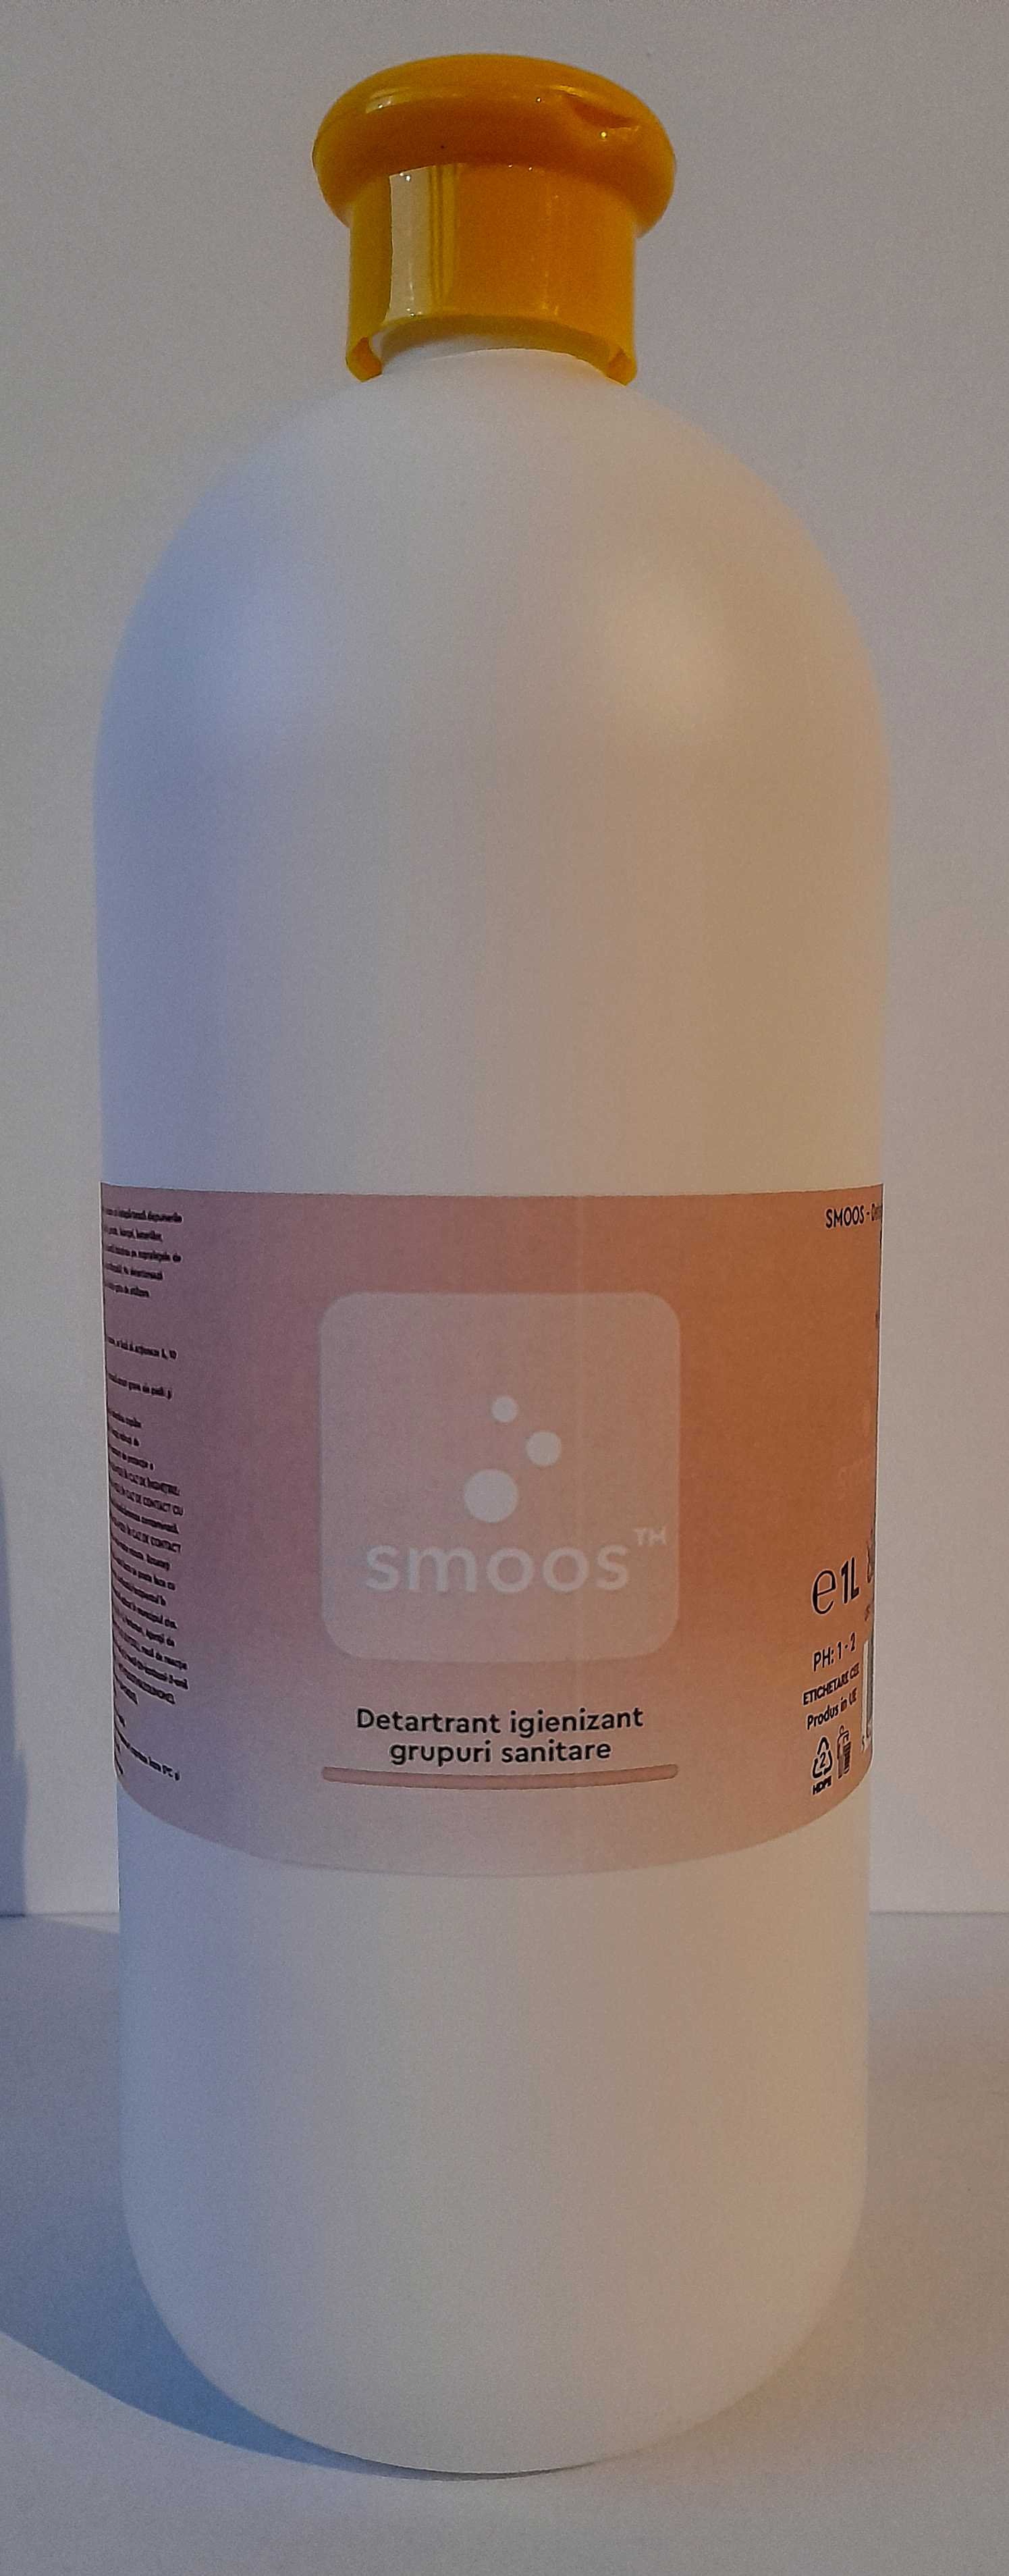 Smoos - Detartrant igienizant grupuri sanitare 1L (SM78574)